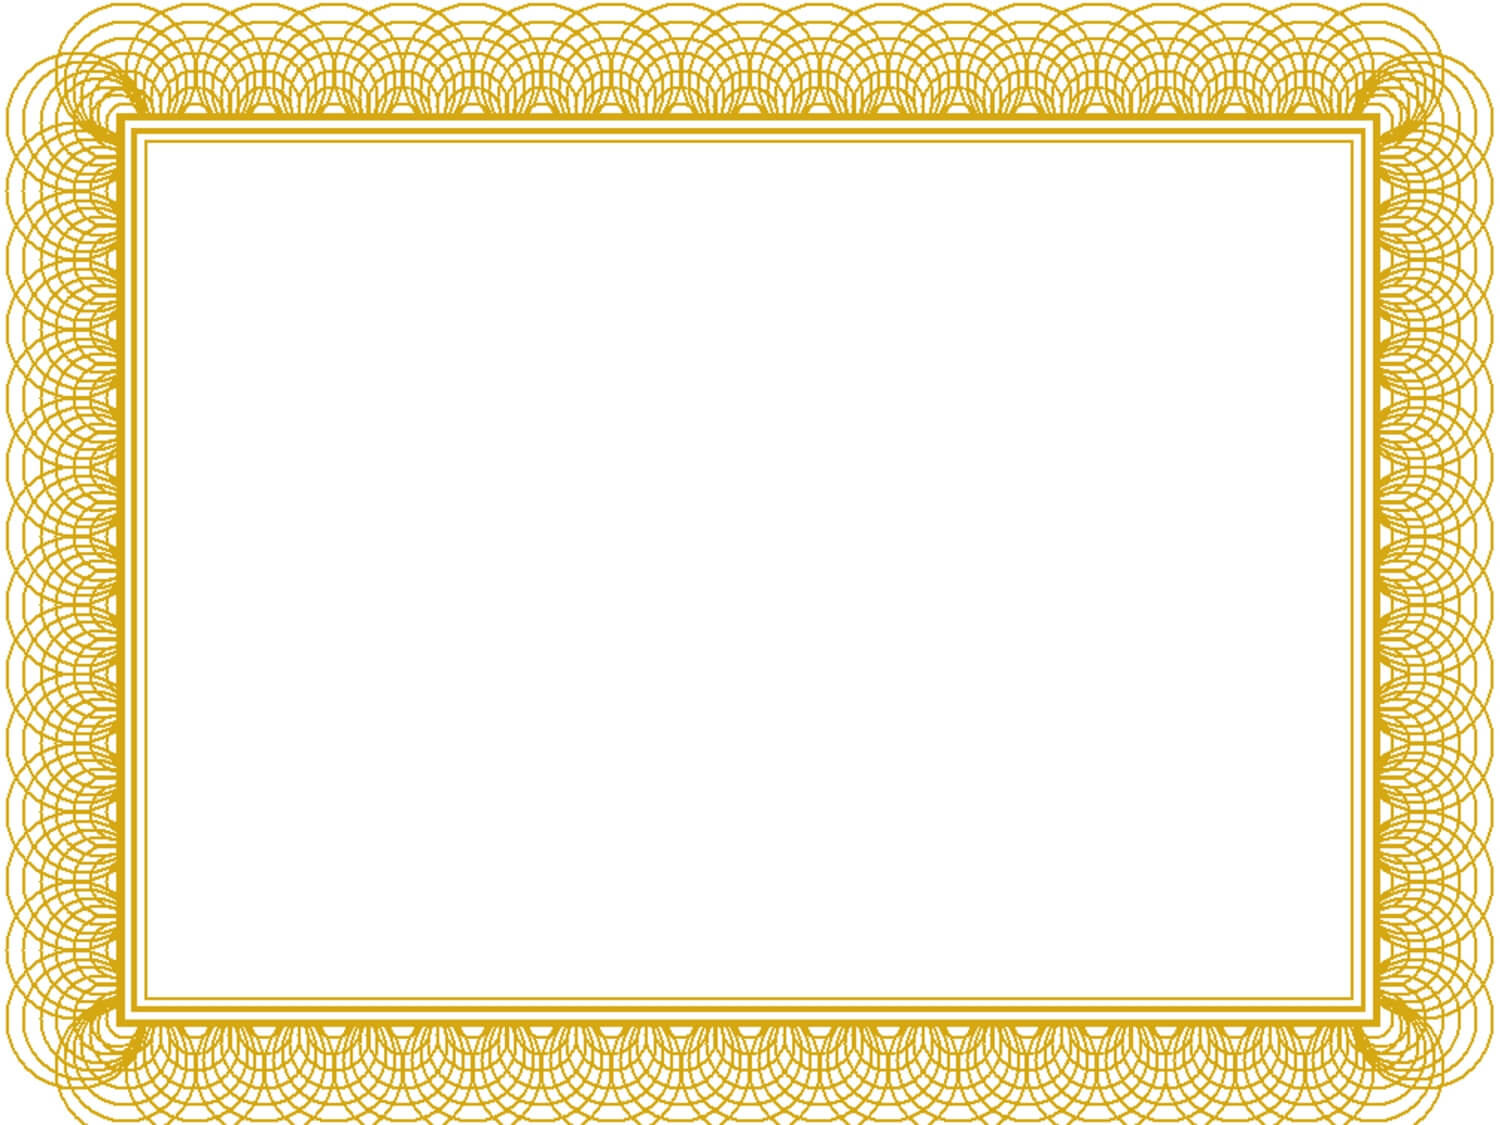 Award Certificate Border Template Pertaining To Gold Pertaining To Award Certificate Border Template